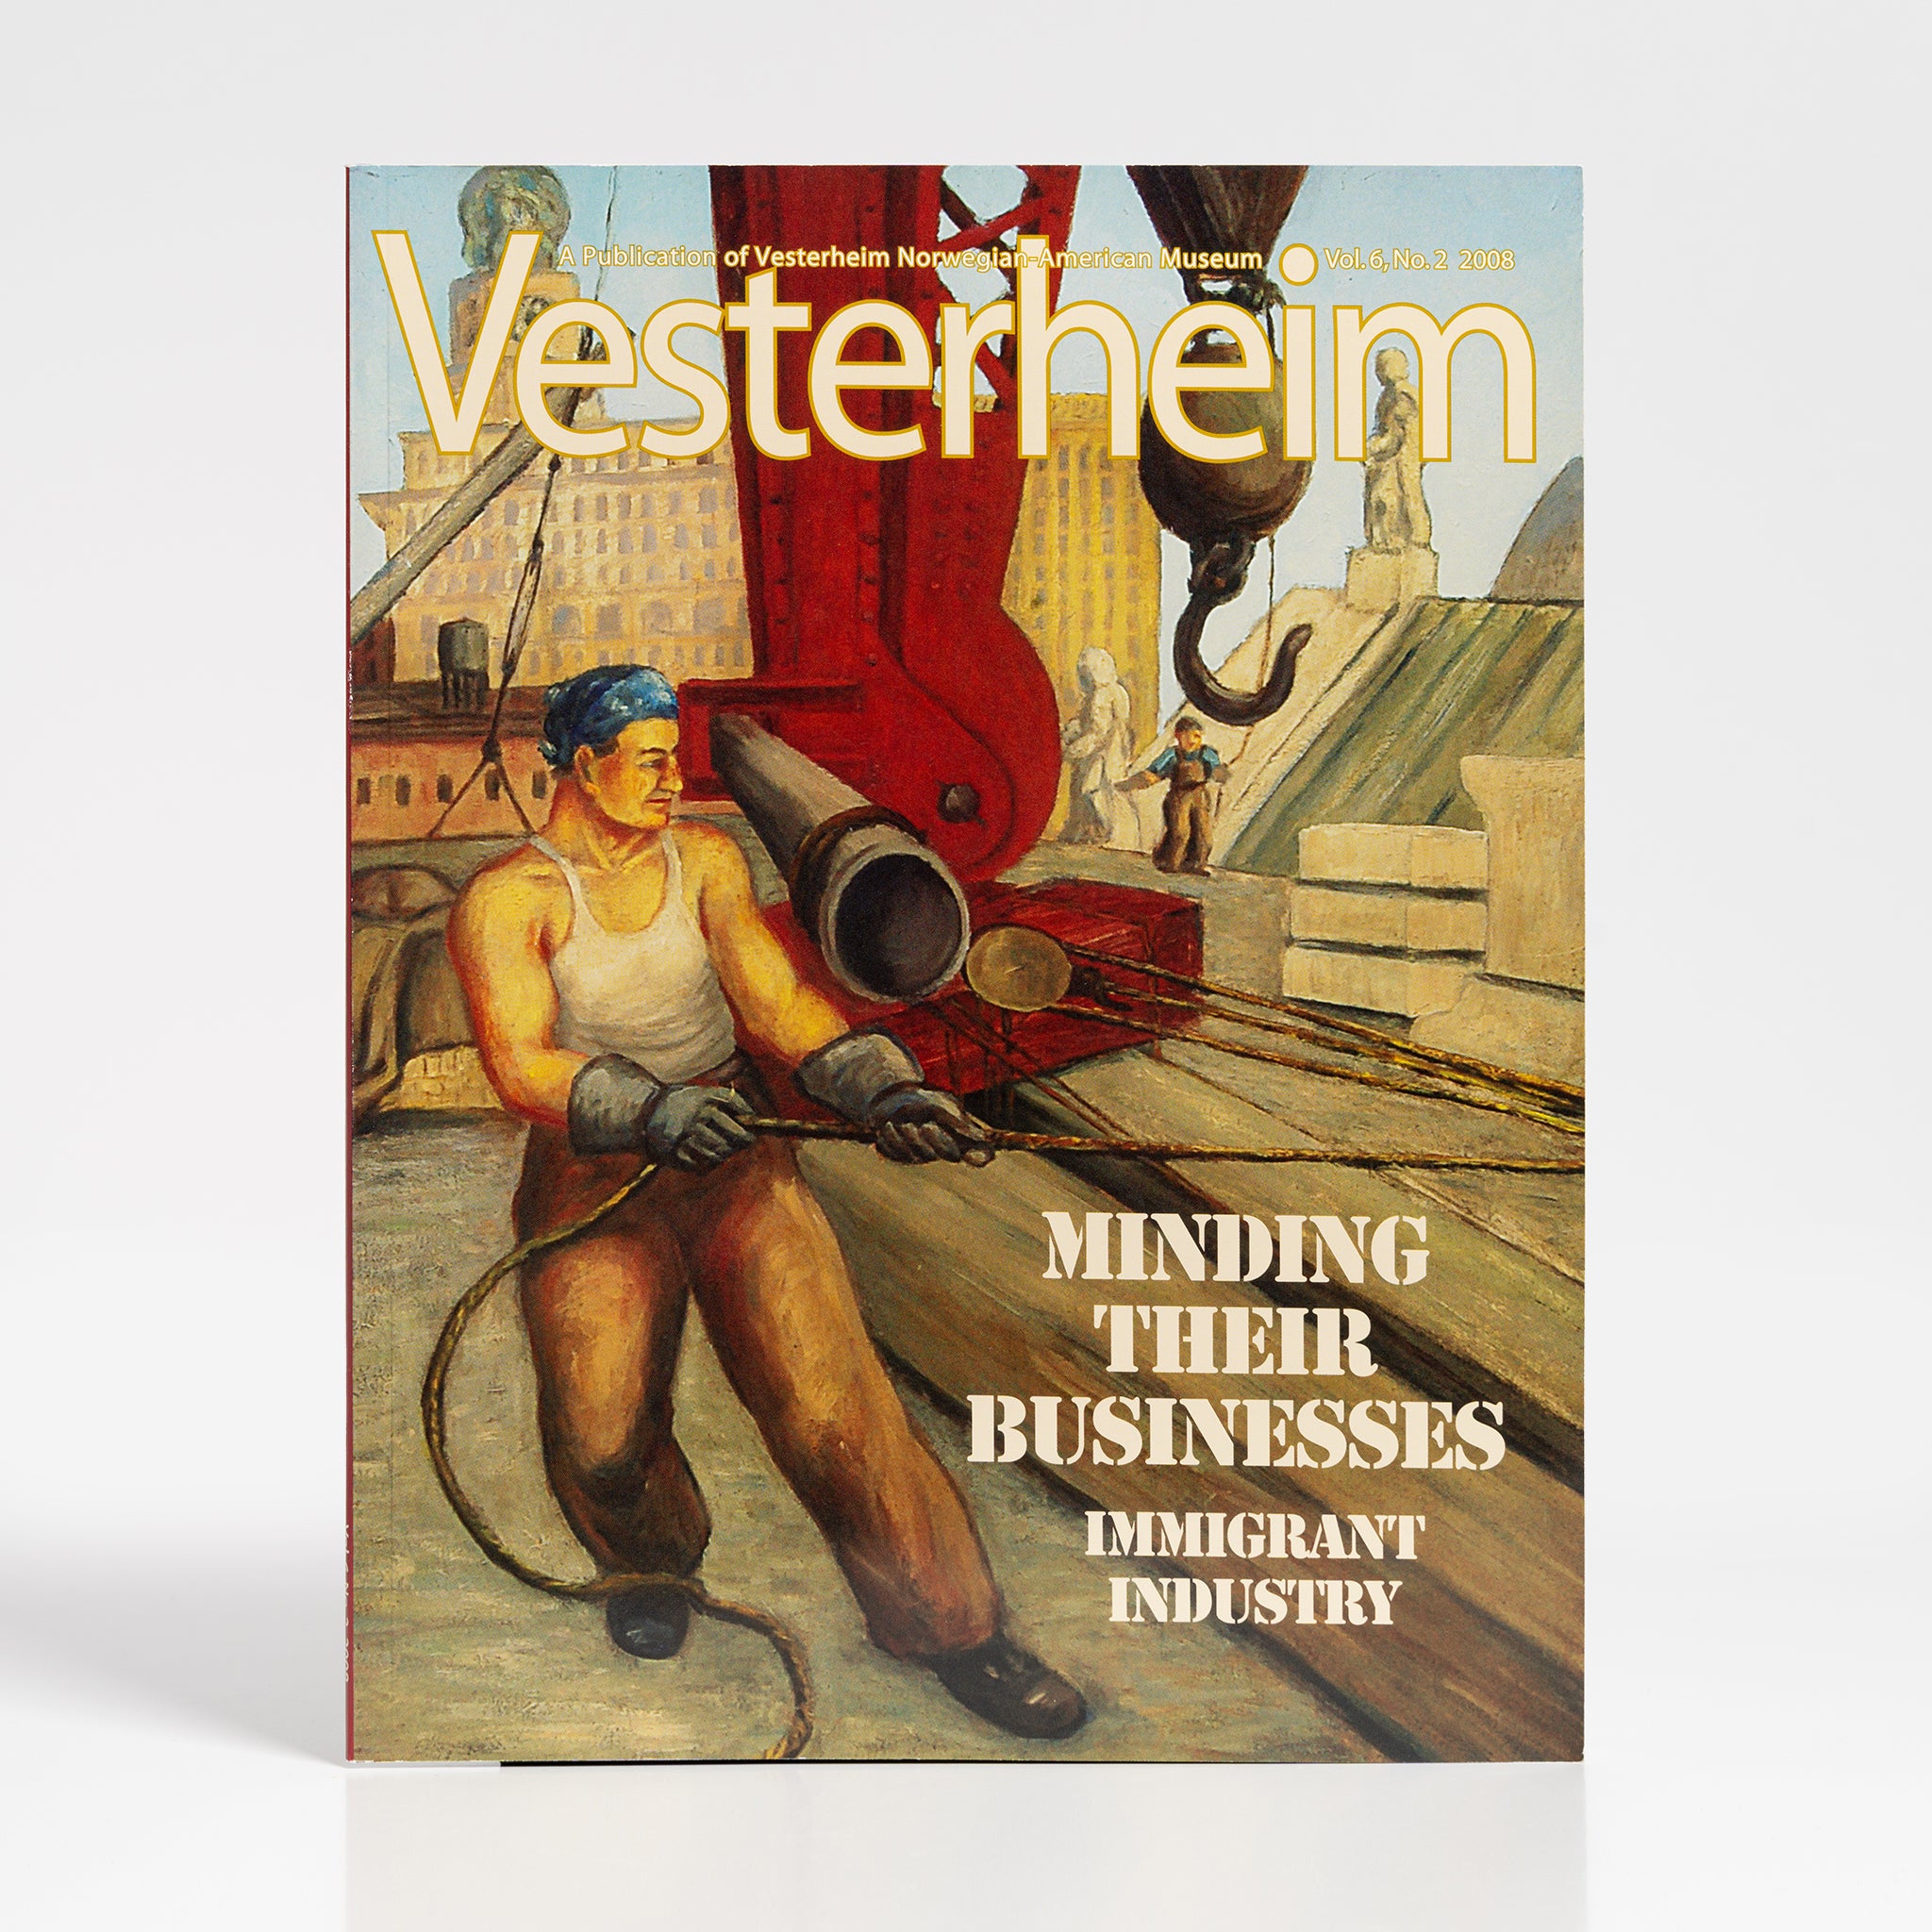 Vesterheim Magazine Vol. 6, No. 2 2008 - Minding Their Businesses